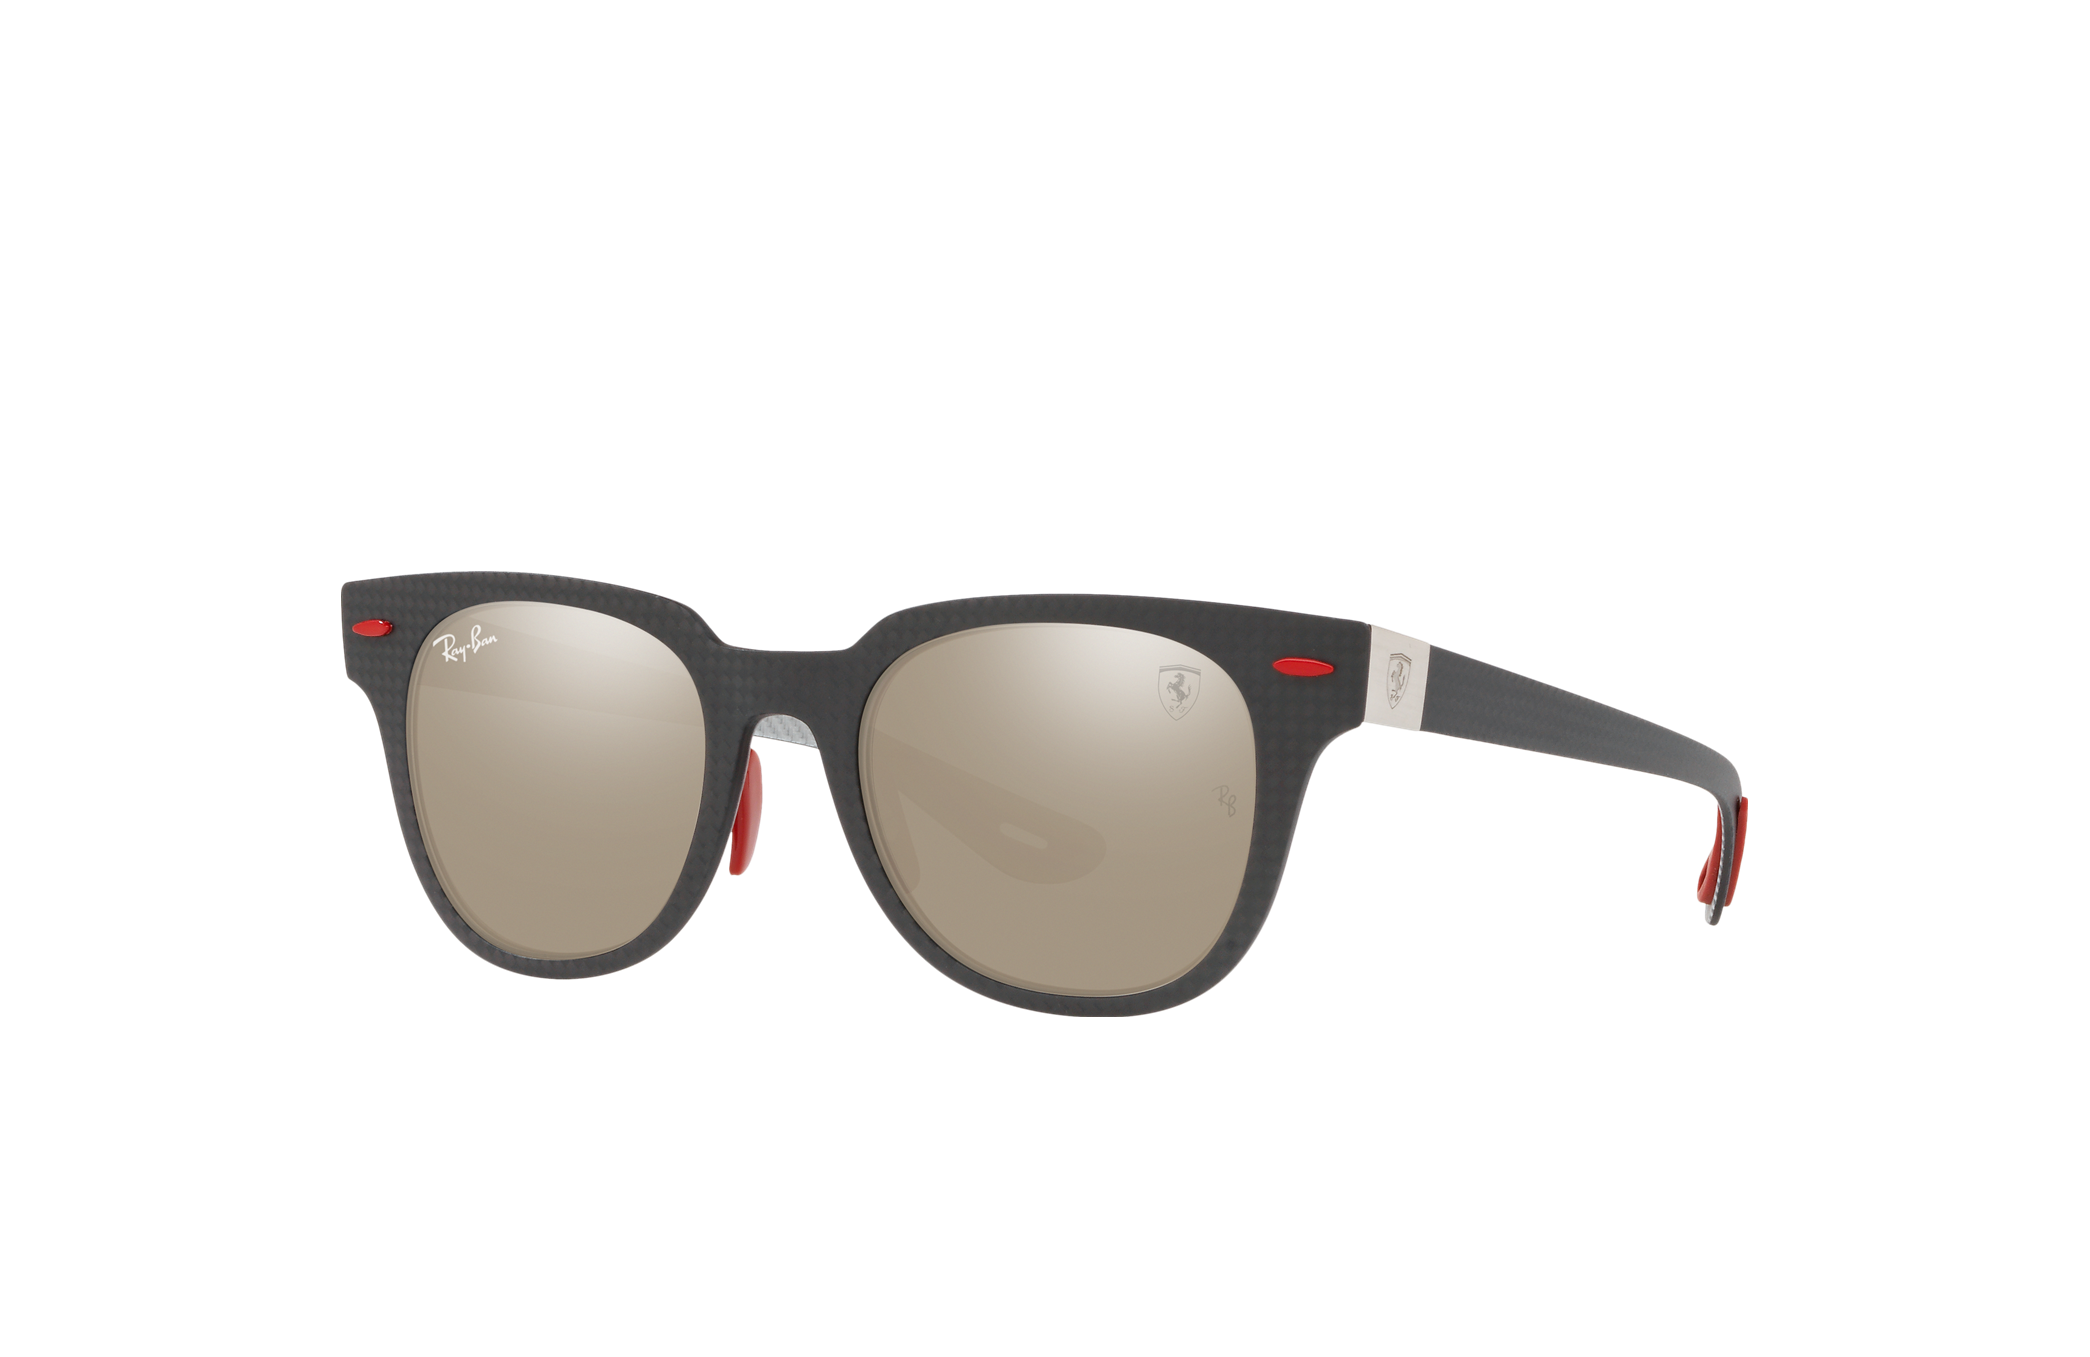 ray ban ferrari sunglasses limited edition